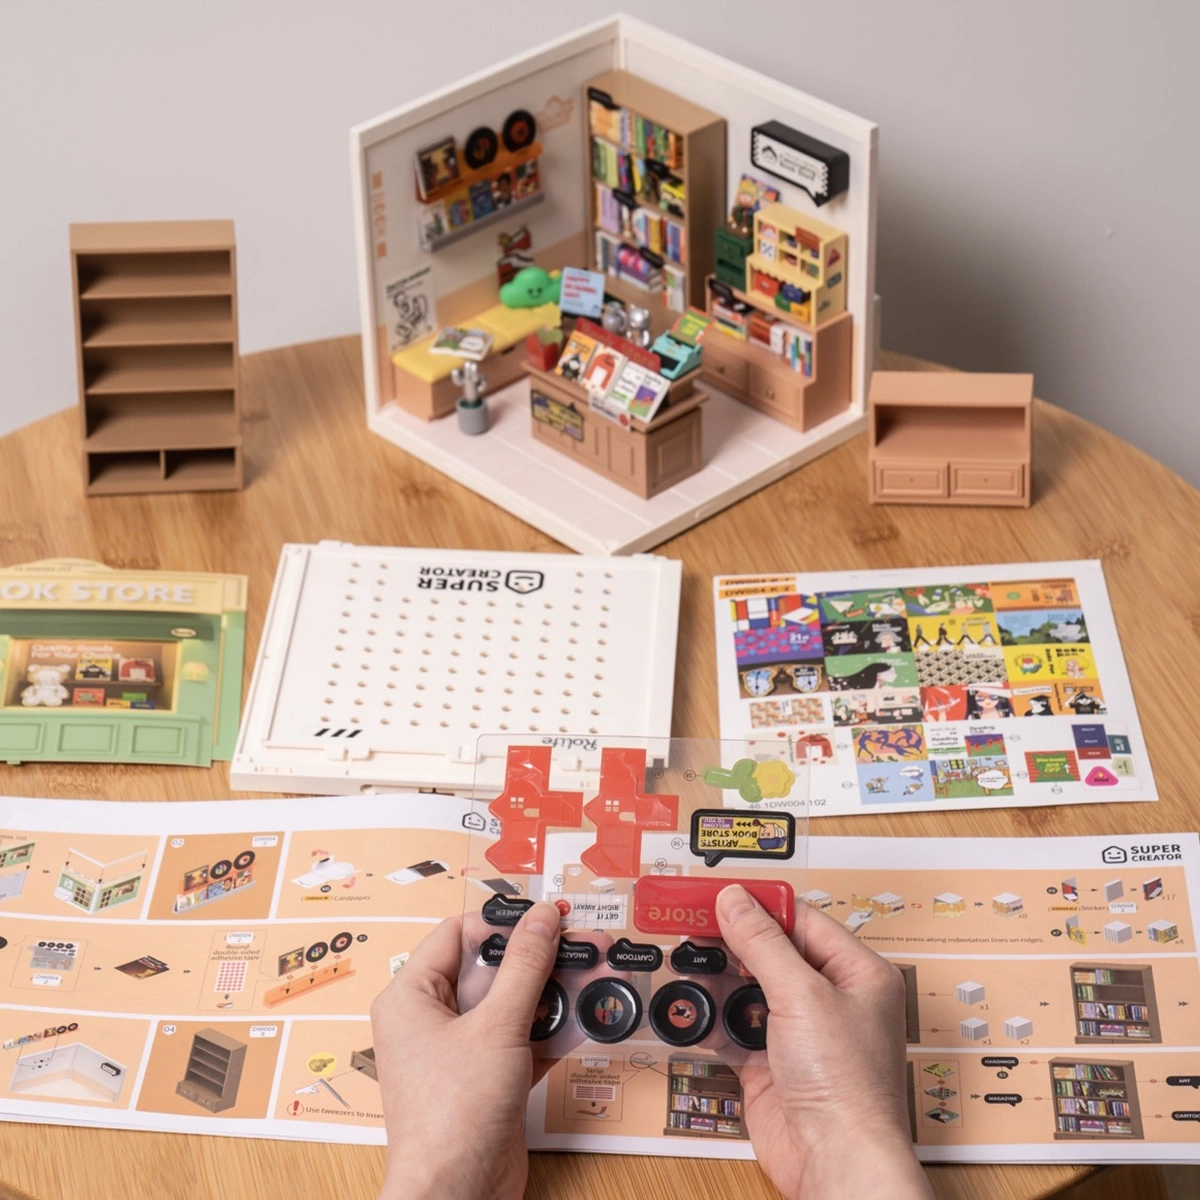 Rolife Plastic Miniature House - Fascinating Book Store DW004